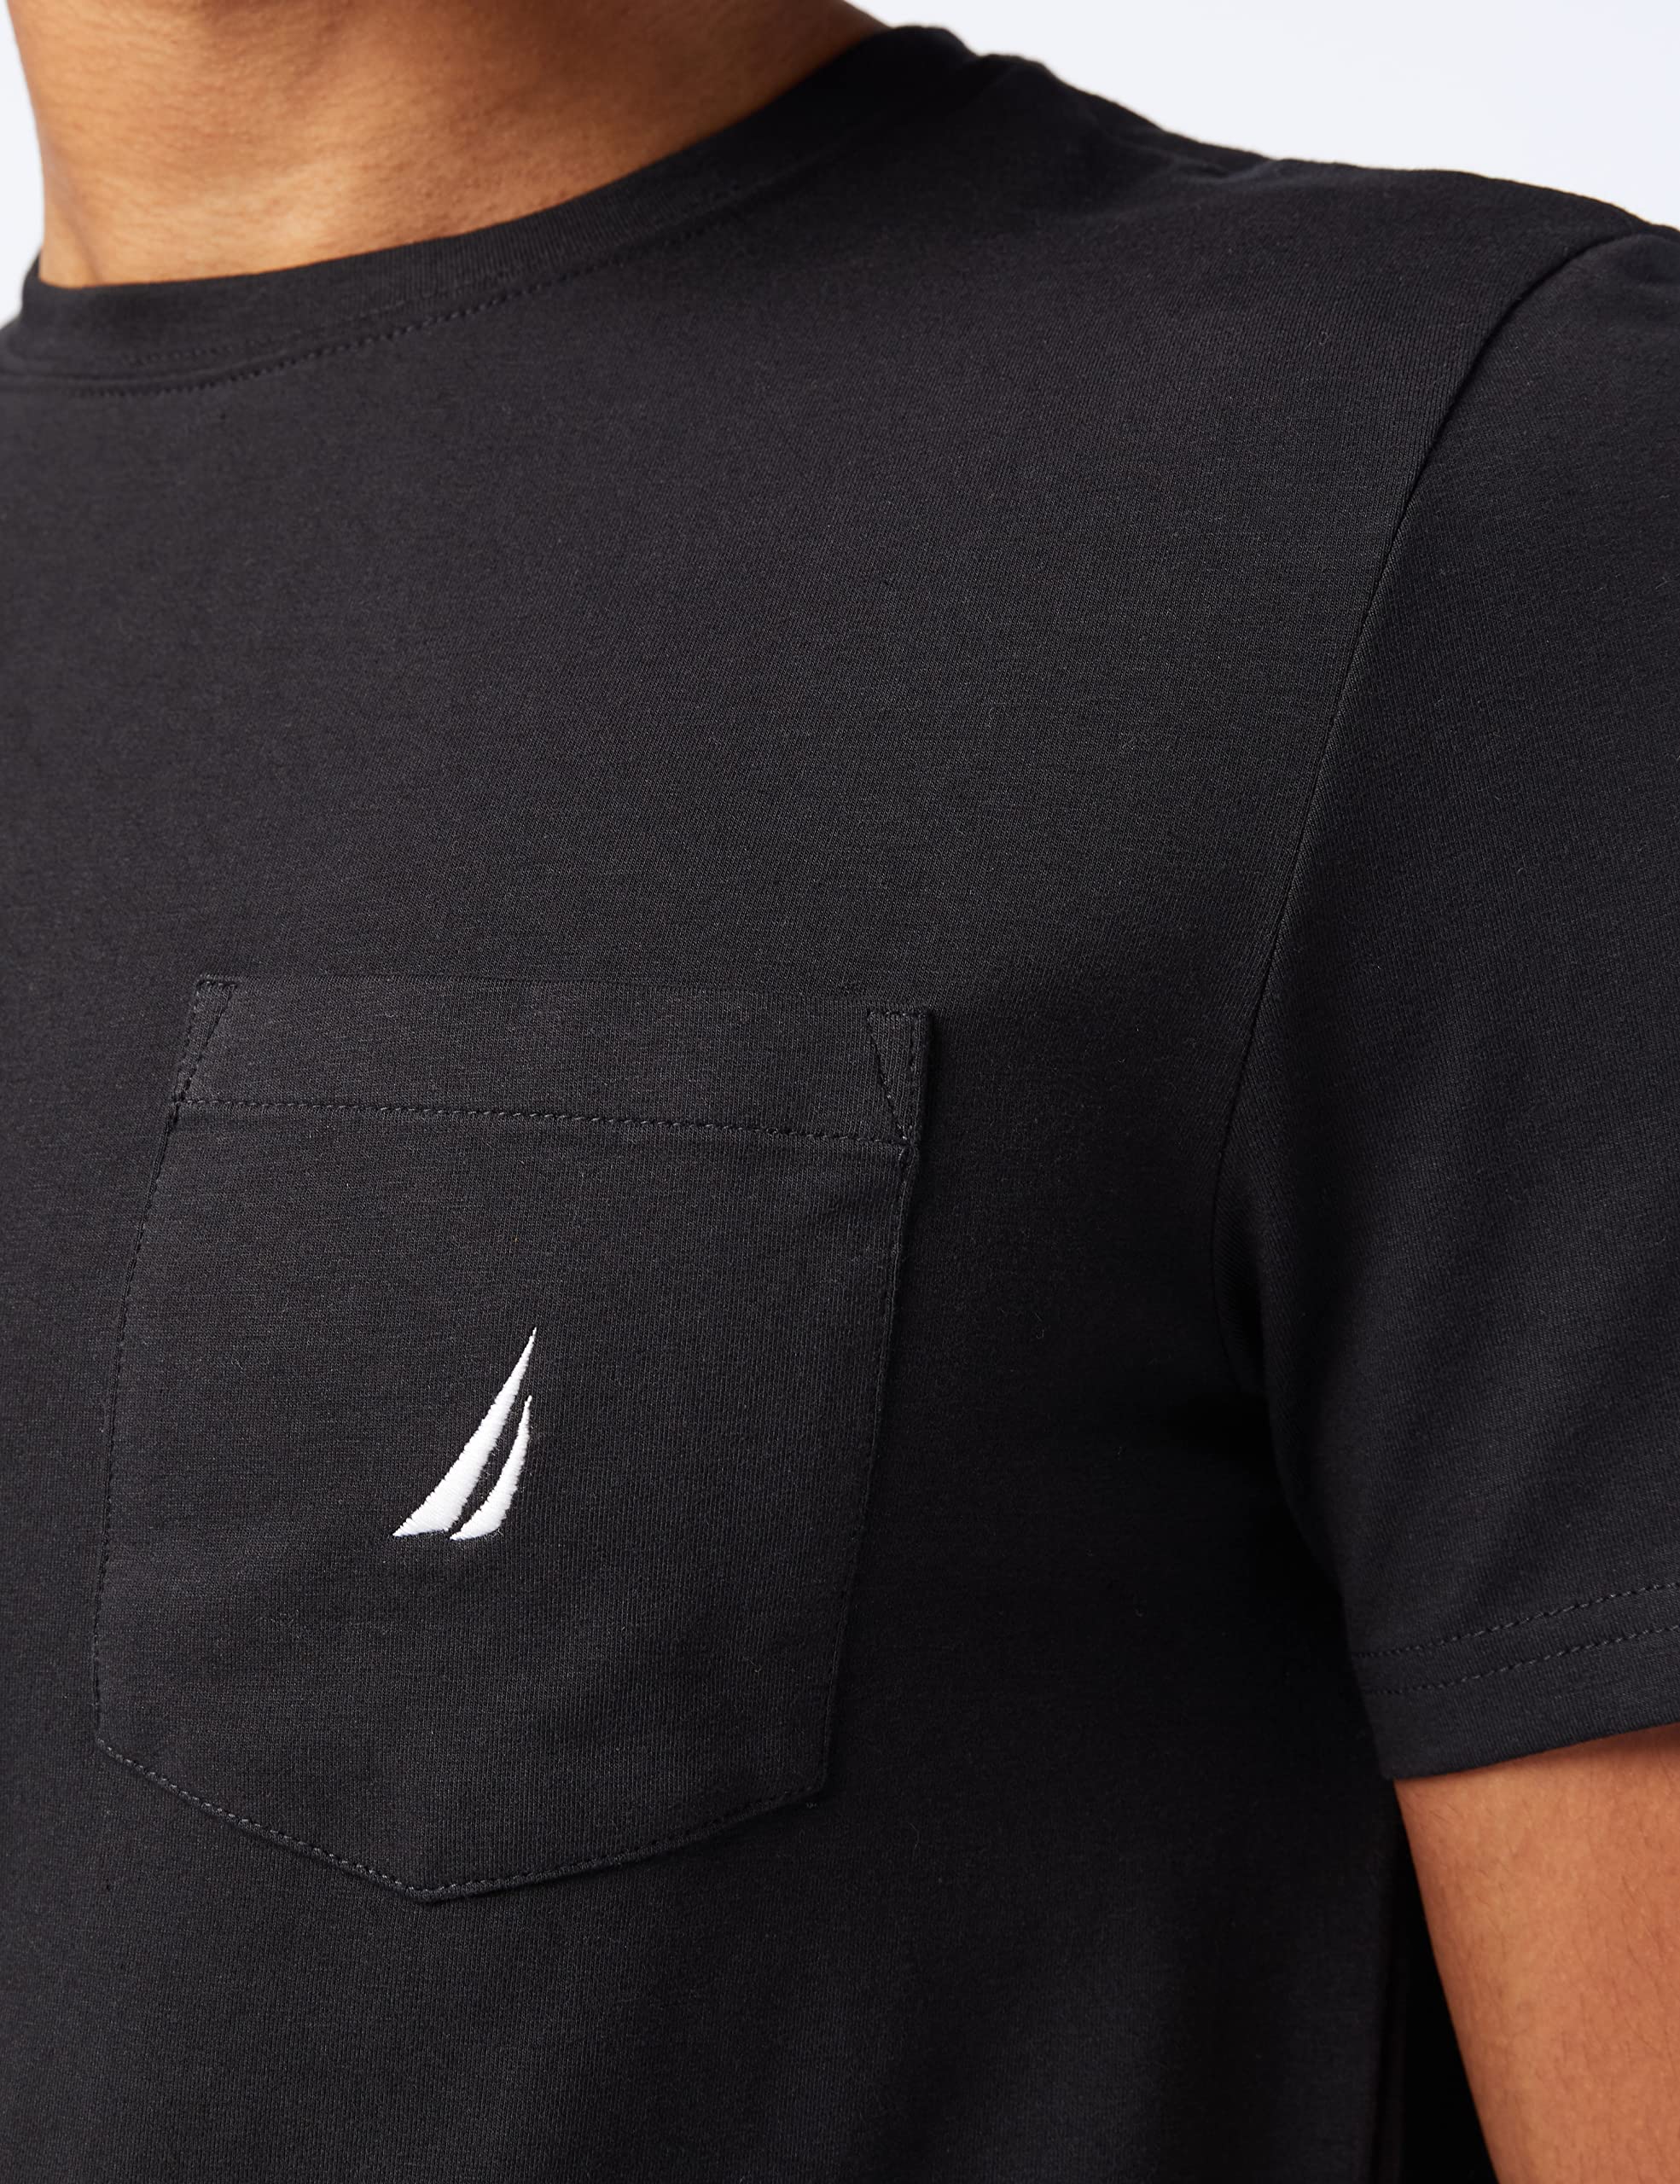 Nautica Men's Solid Crew Neck Short Sleeve Pocket T-Shirt